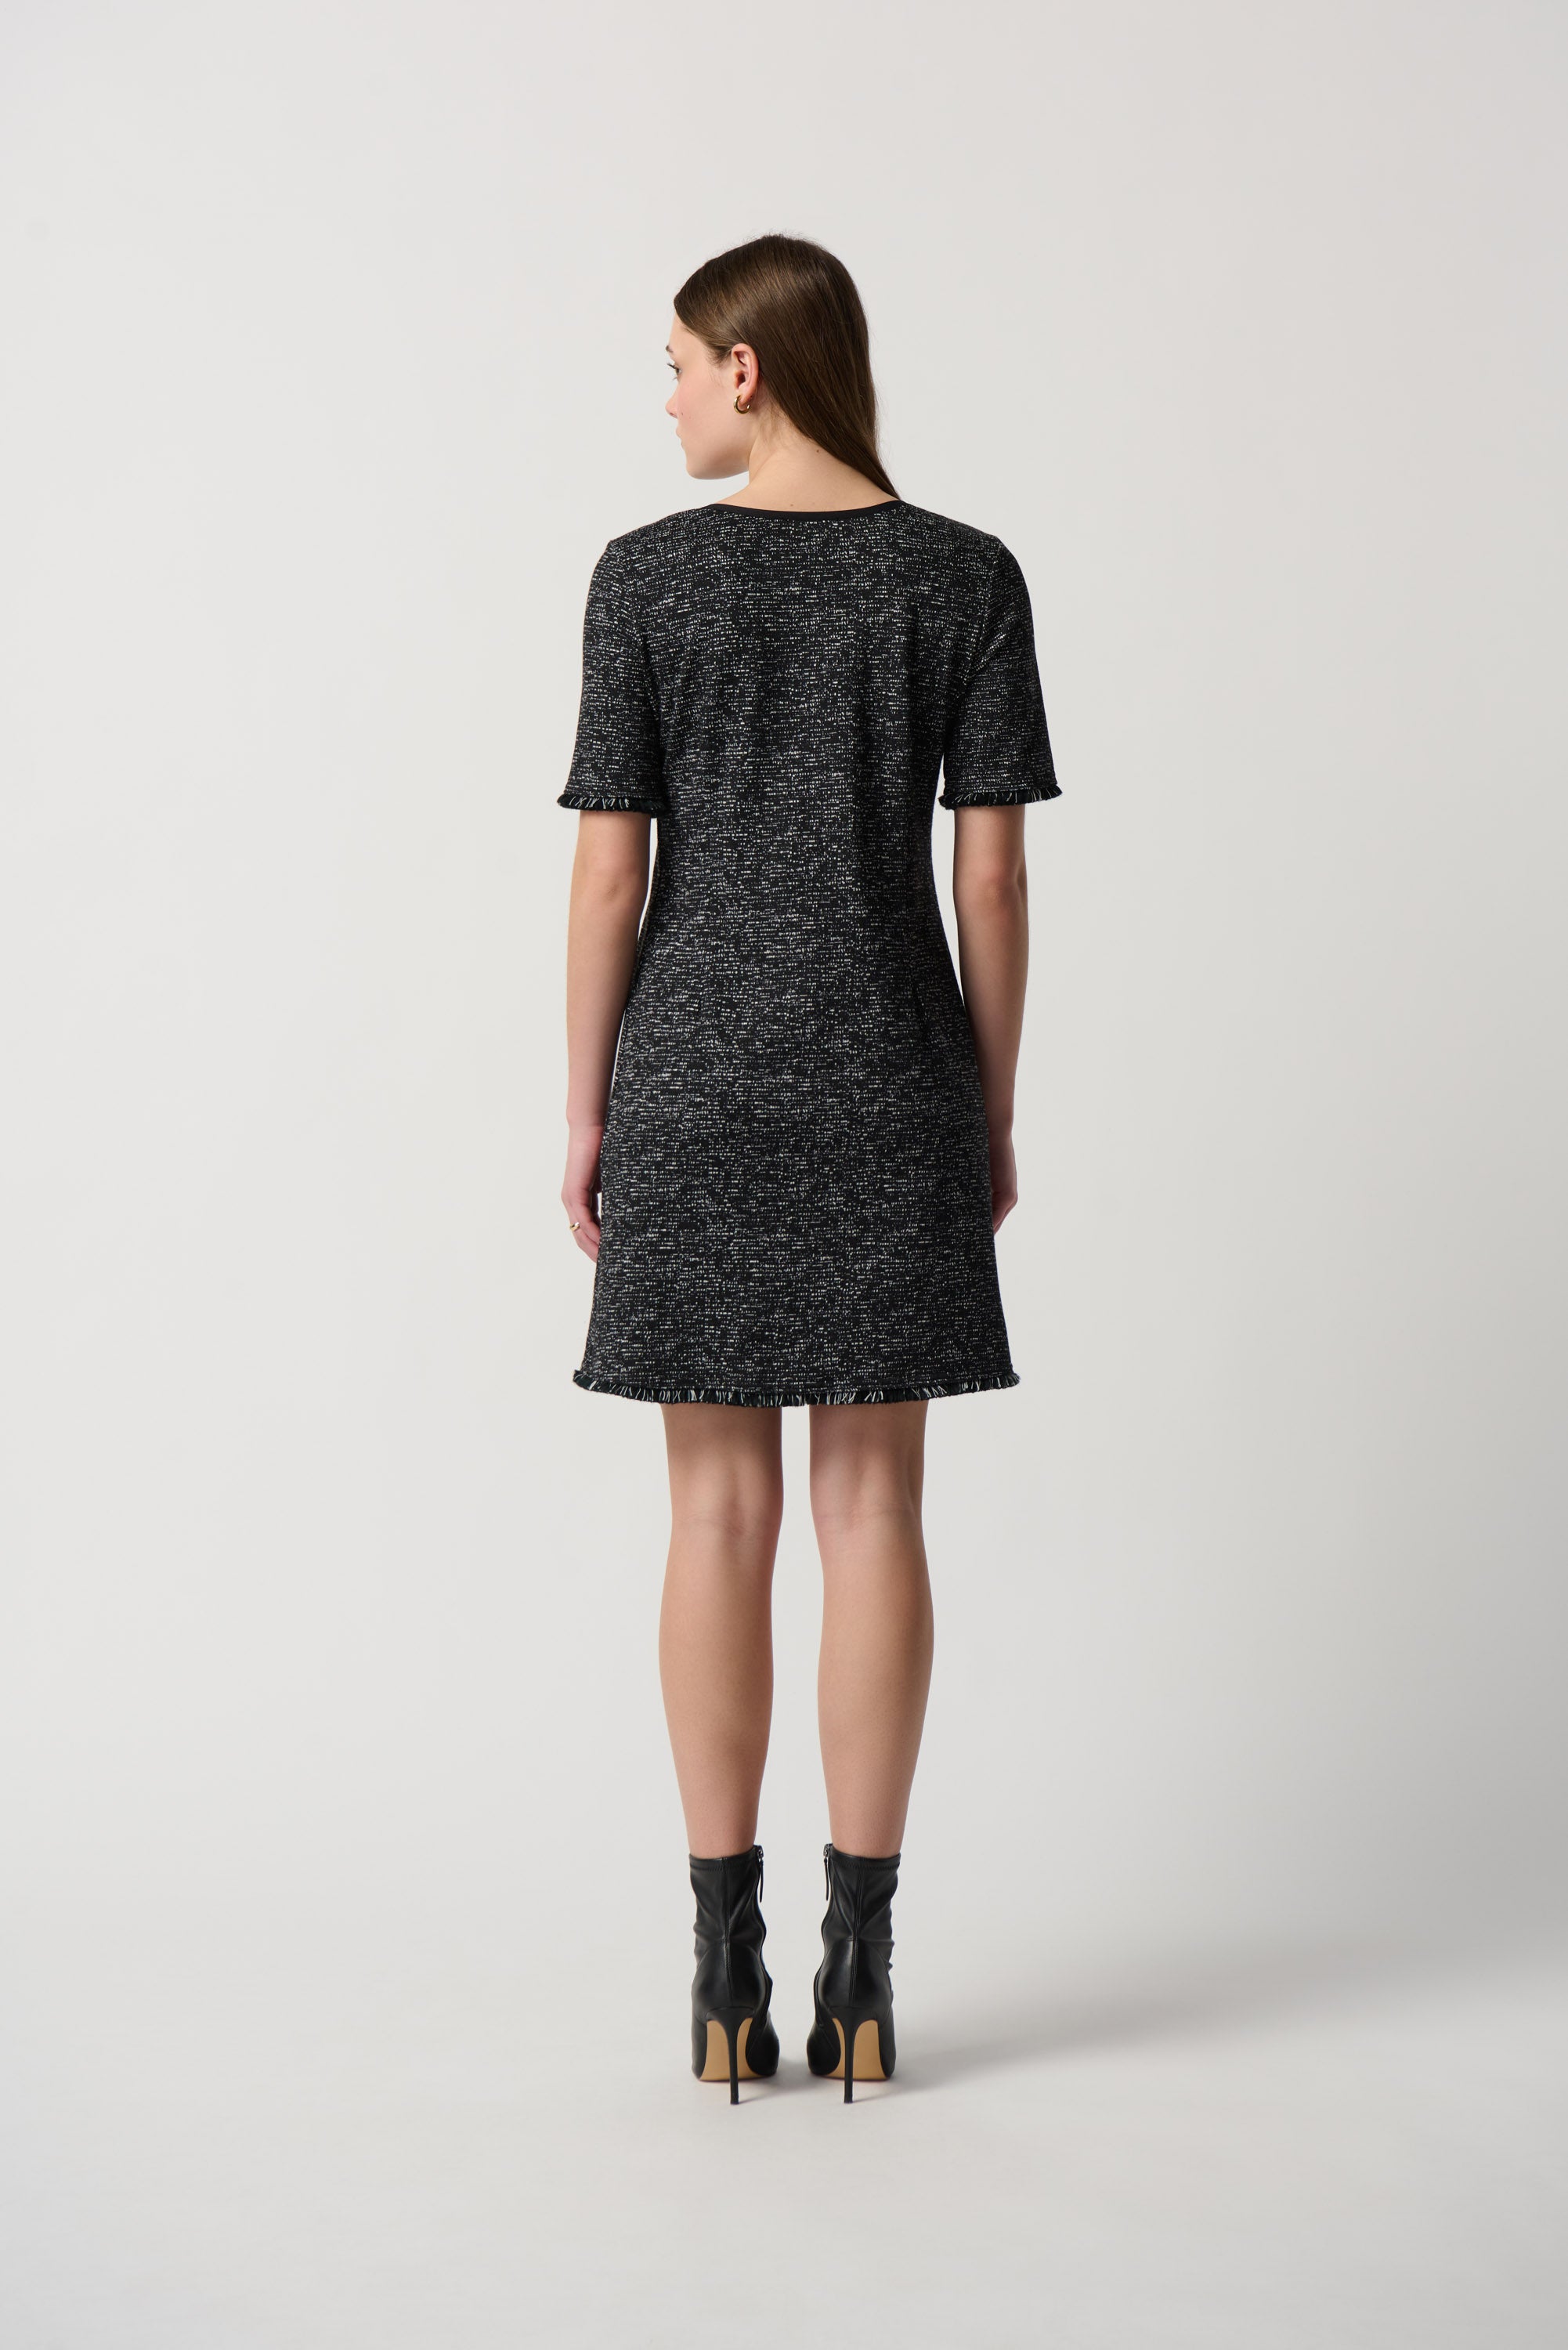 Jacquard Knit Dress With Fringe Detail-Joseph Ribkoff-Style 234157